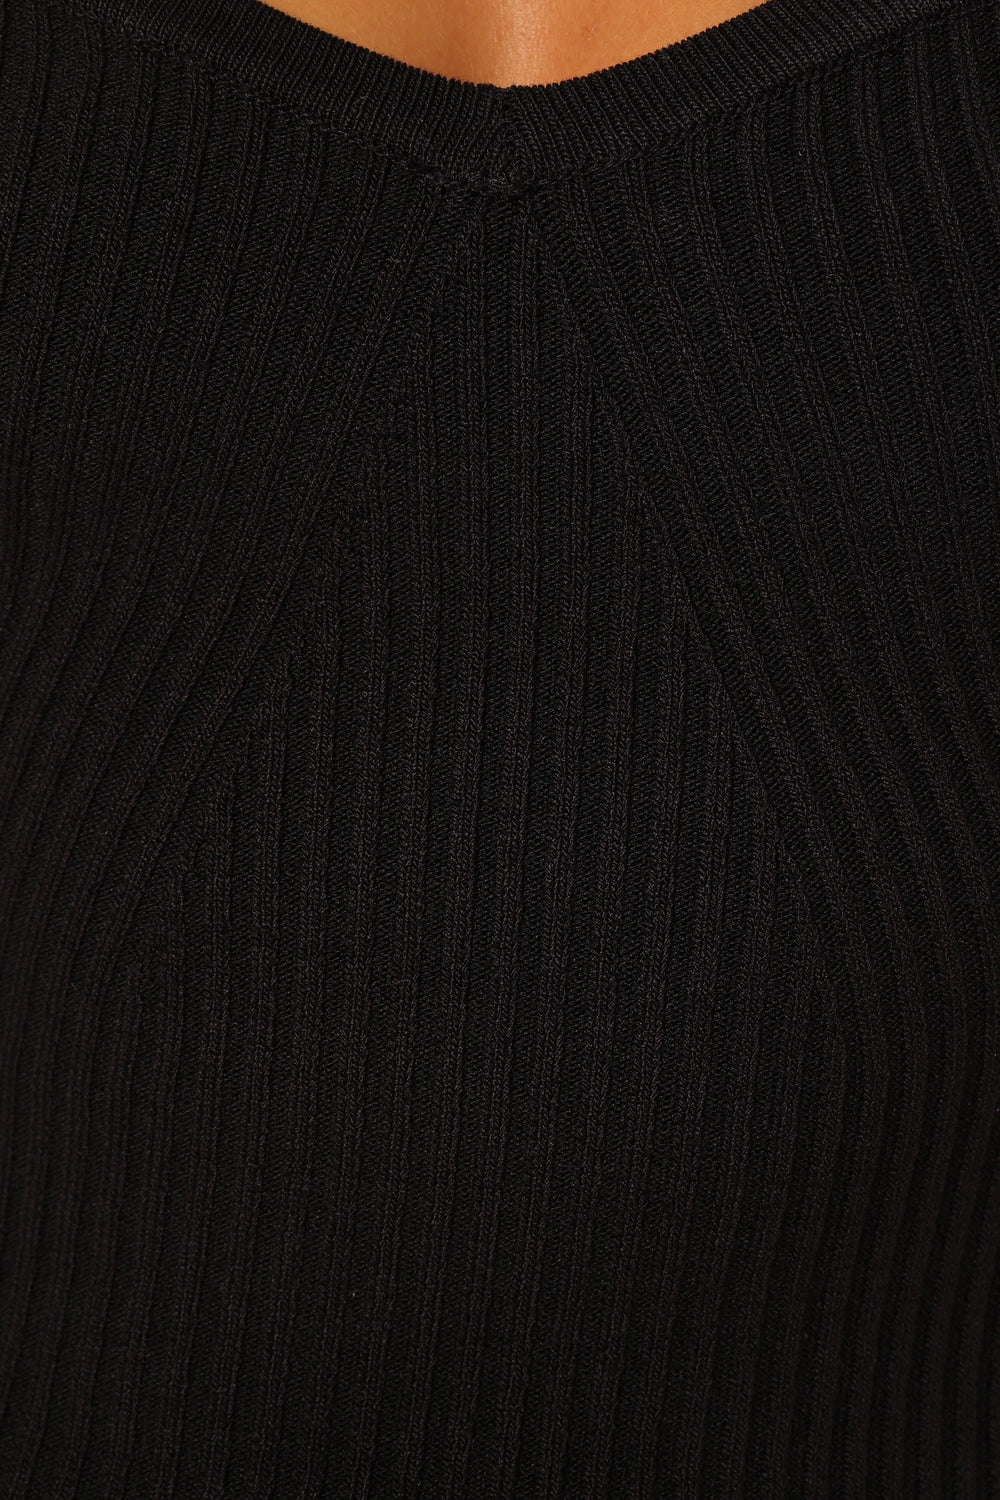 Pari Strapless Knit Top - Black - Petal & Pup